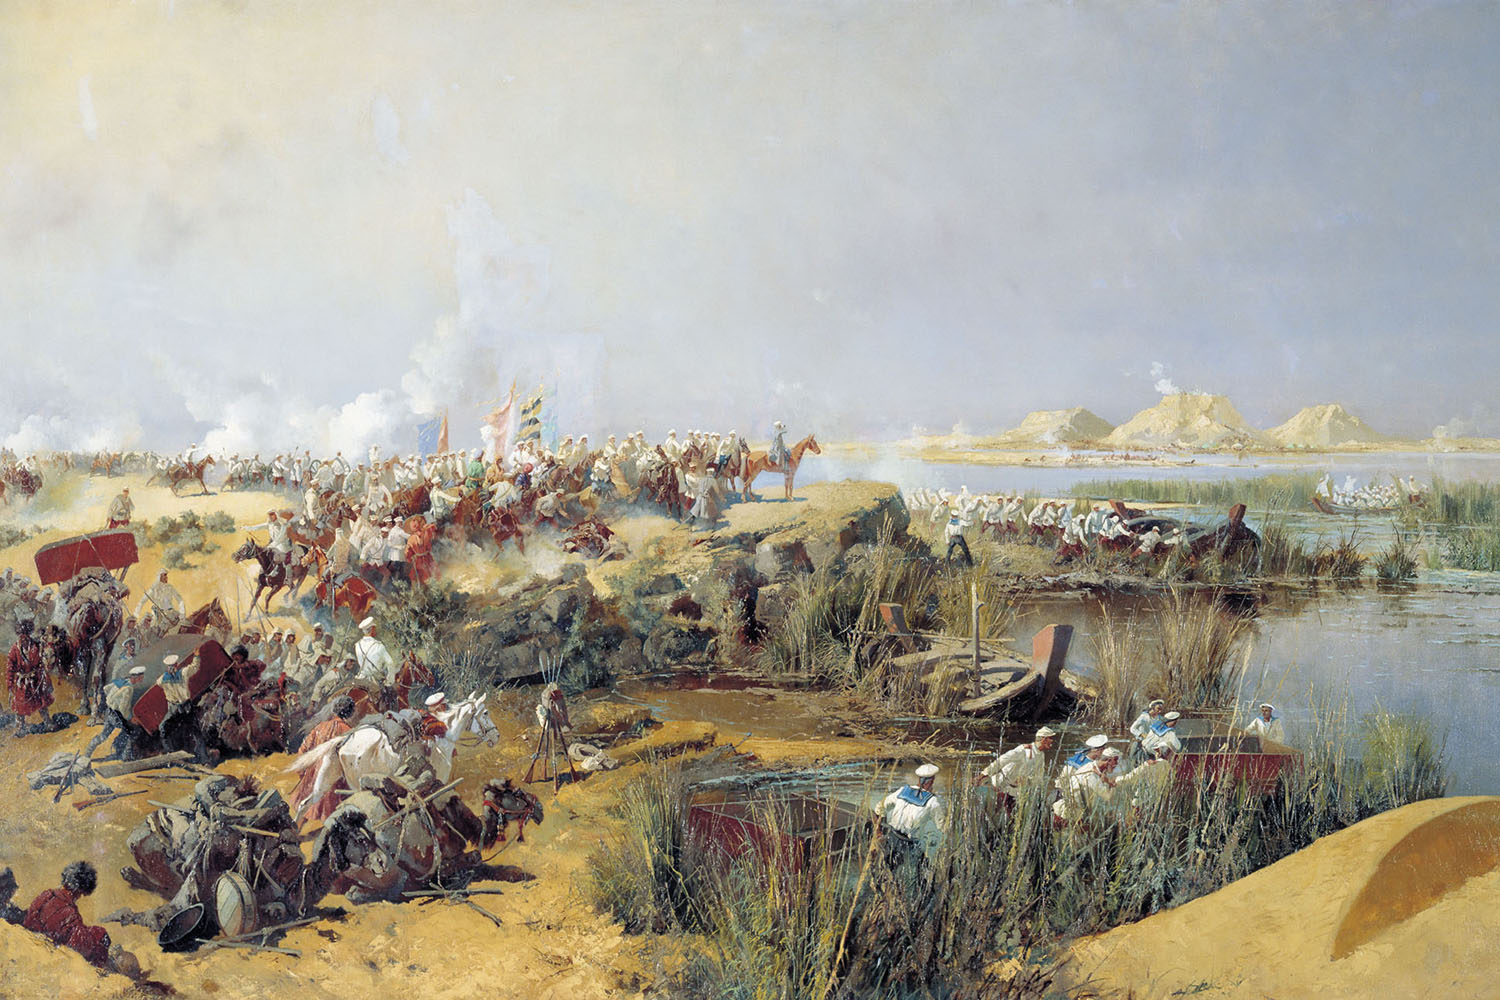 Russian Forces Crossing the Amu Darya River, Khiva Campaign, 1873, by Nikolay Karazin, 1889.